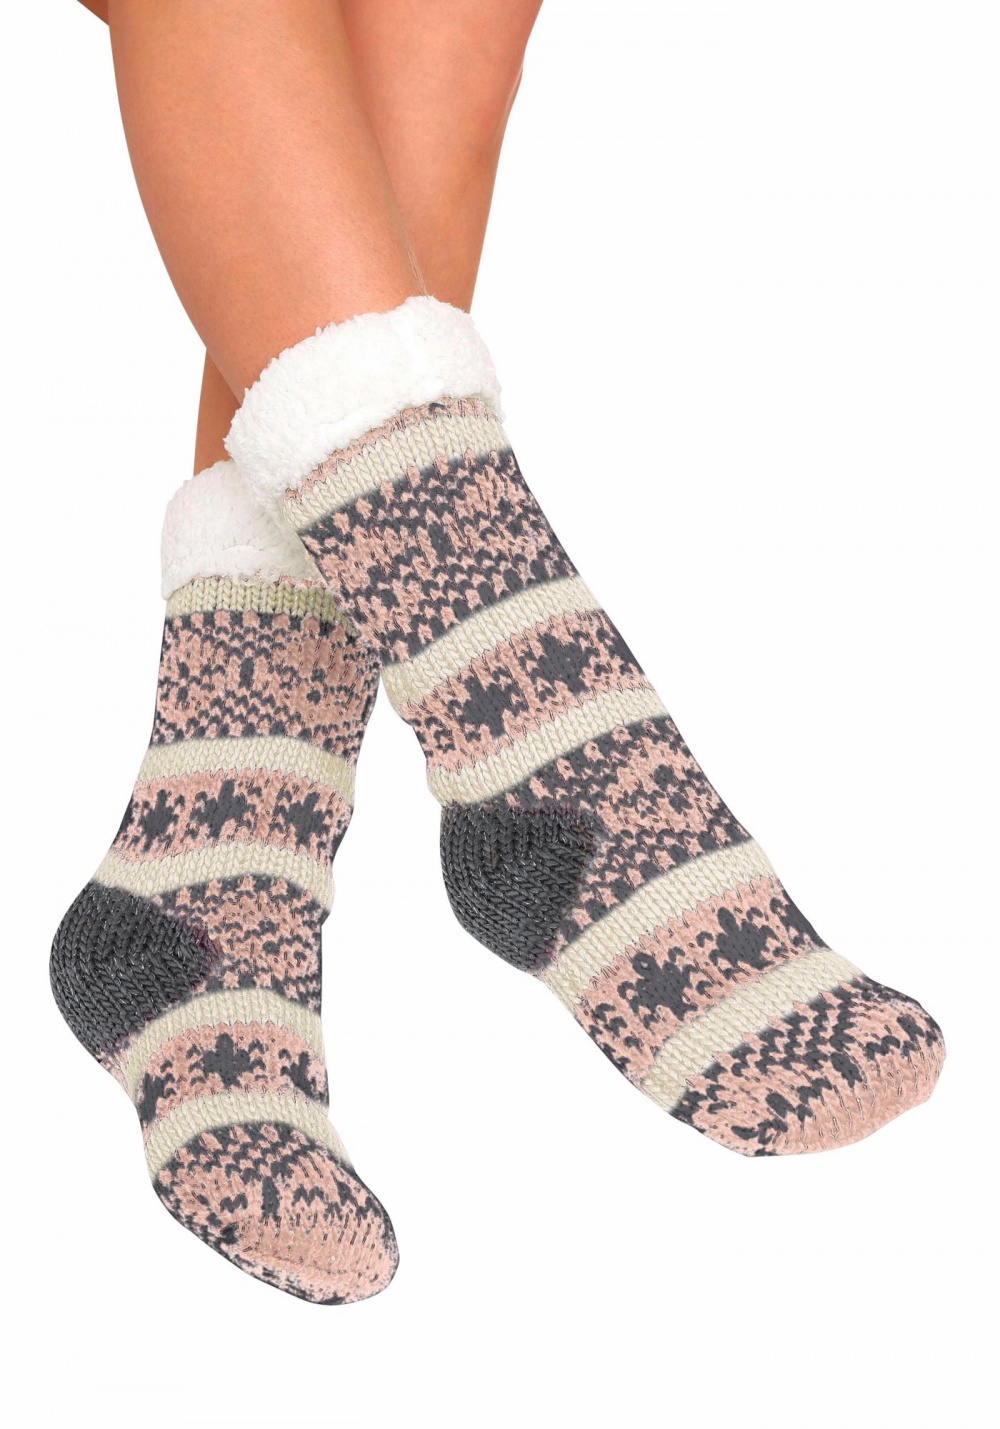 Теплые зимние носки. Теплые носки. Женские теплые носочки. Носки теплые женские красивые.